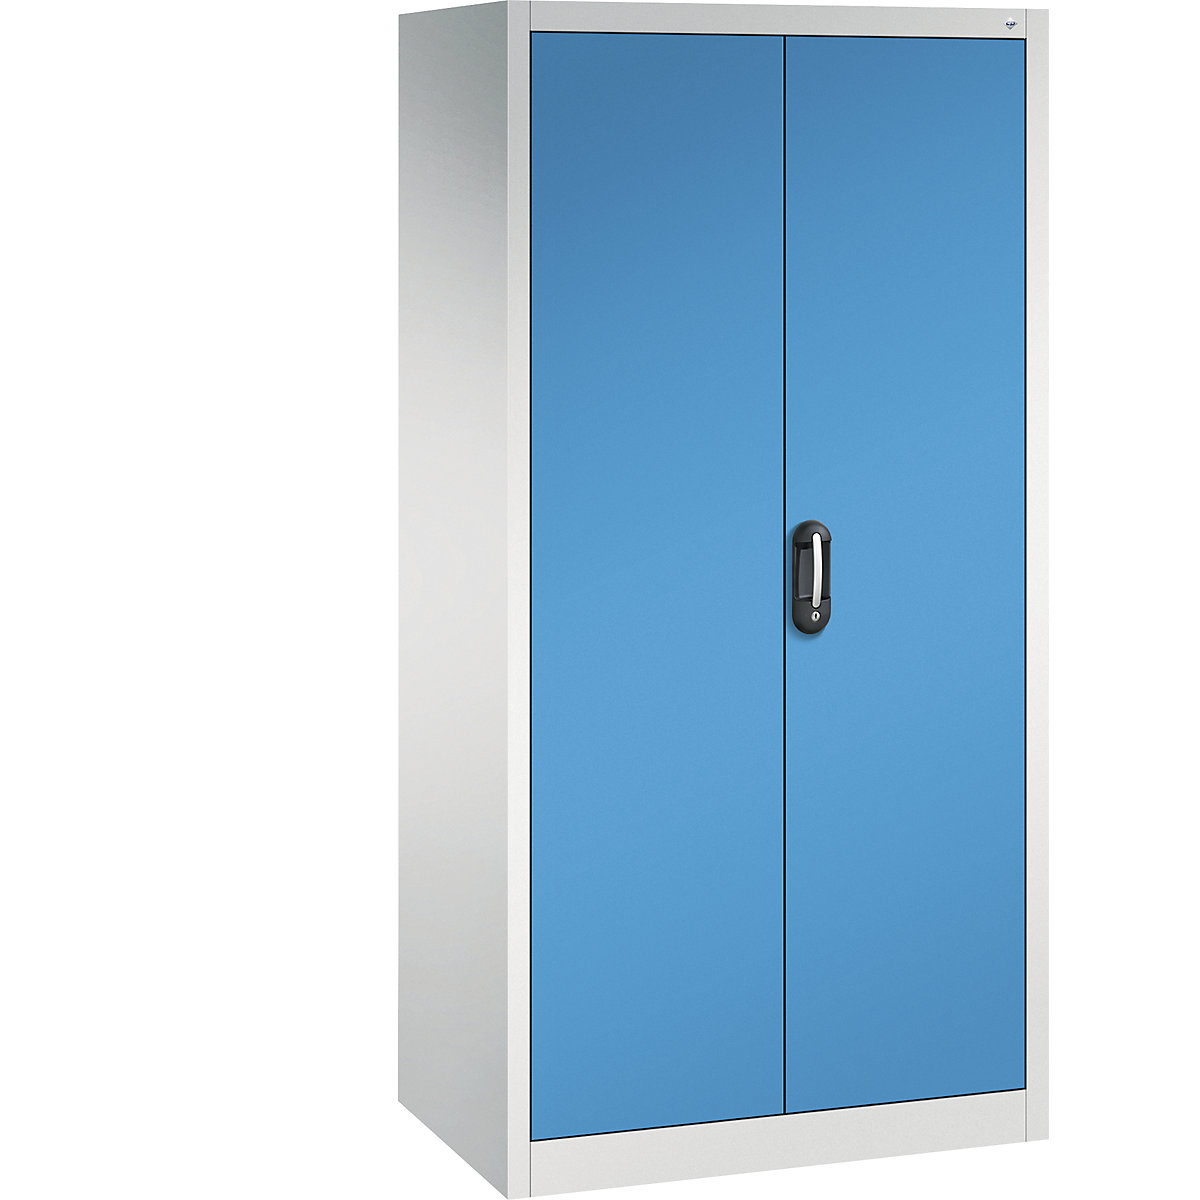 Armoire universelle ACURADO – C+P, l x p 930 x 600 mm, gris clair / bleu clair-23